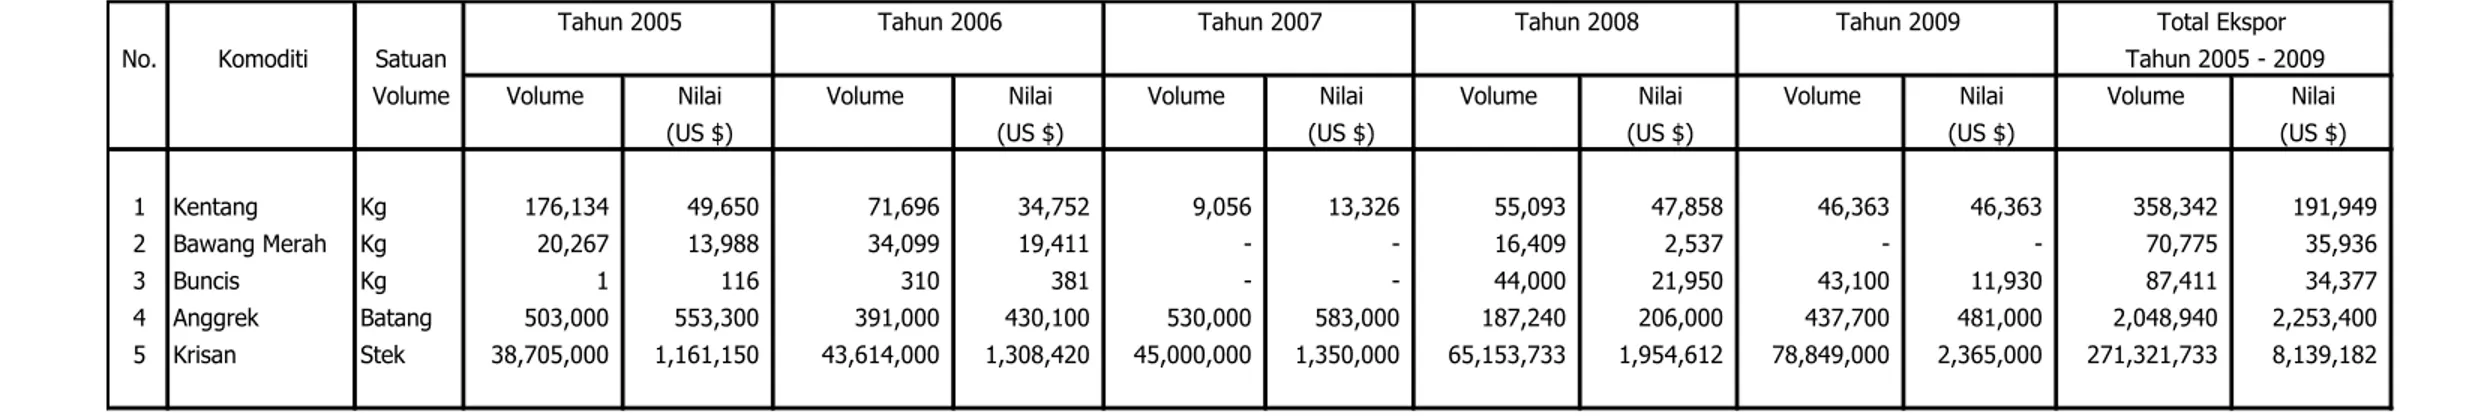 Tabel 6. Perkembangan Impor Benih Hortikultuta Tahun 2005 - 2009 